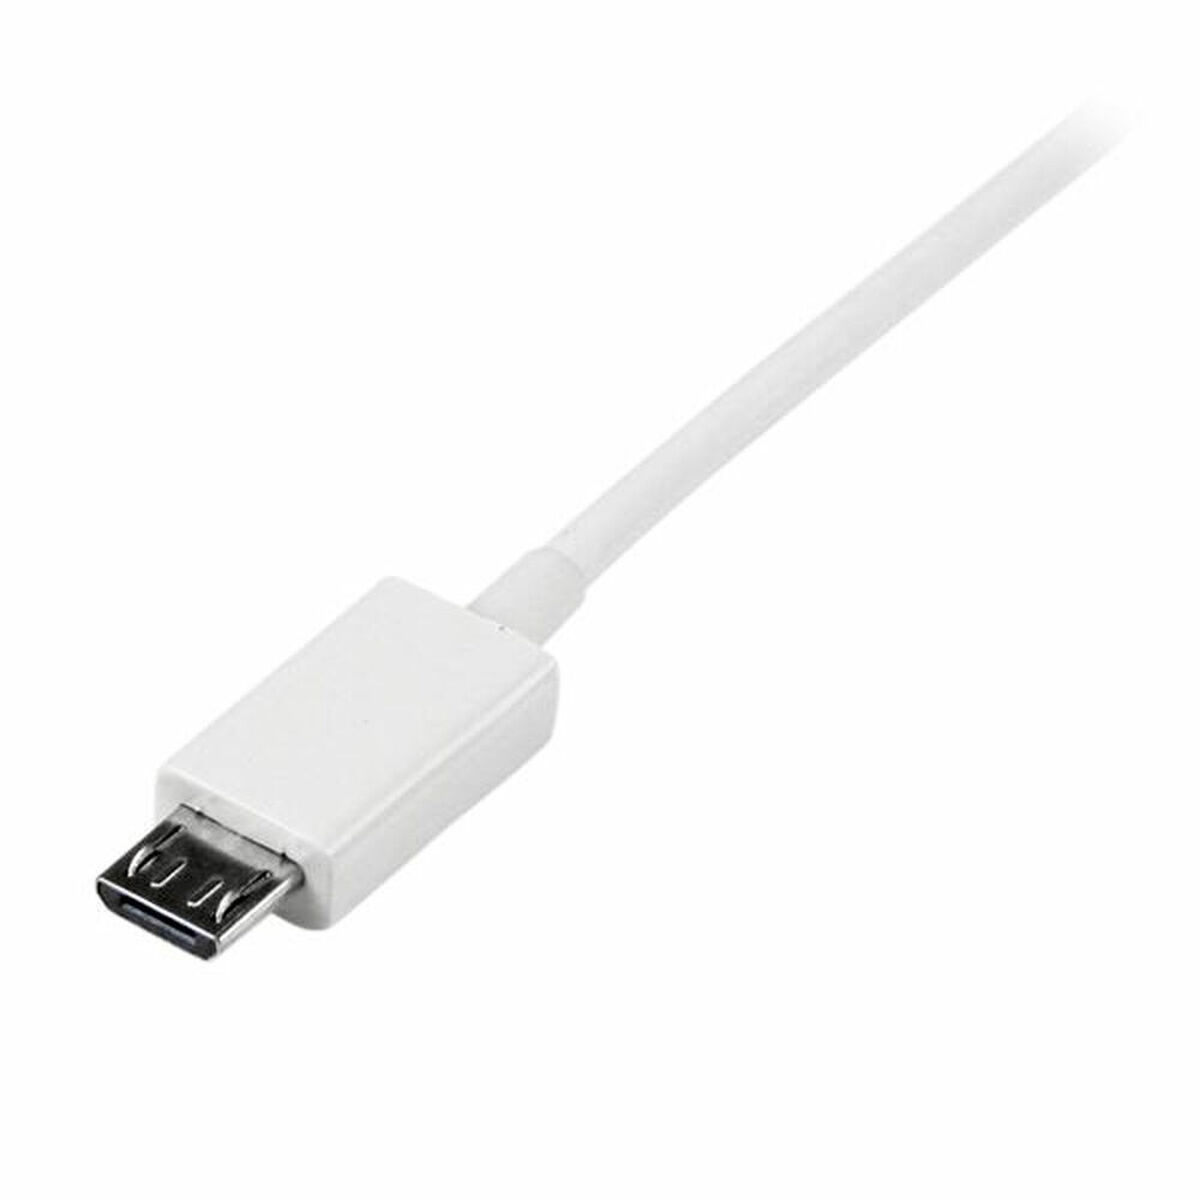 USB Cable to micro USB Startech USBPAUB1MW White 1 m